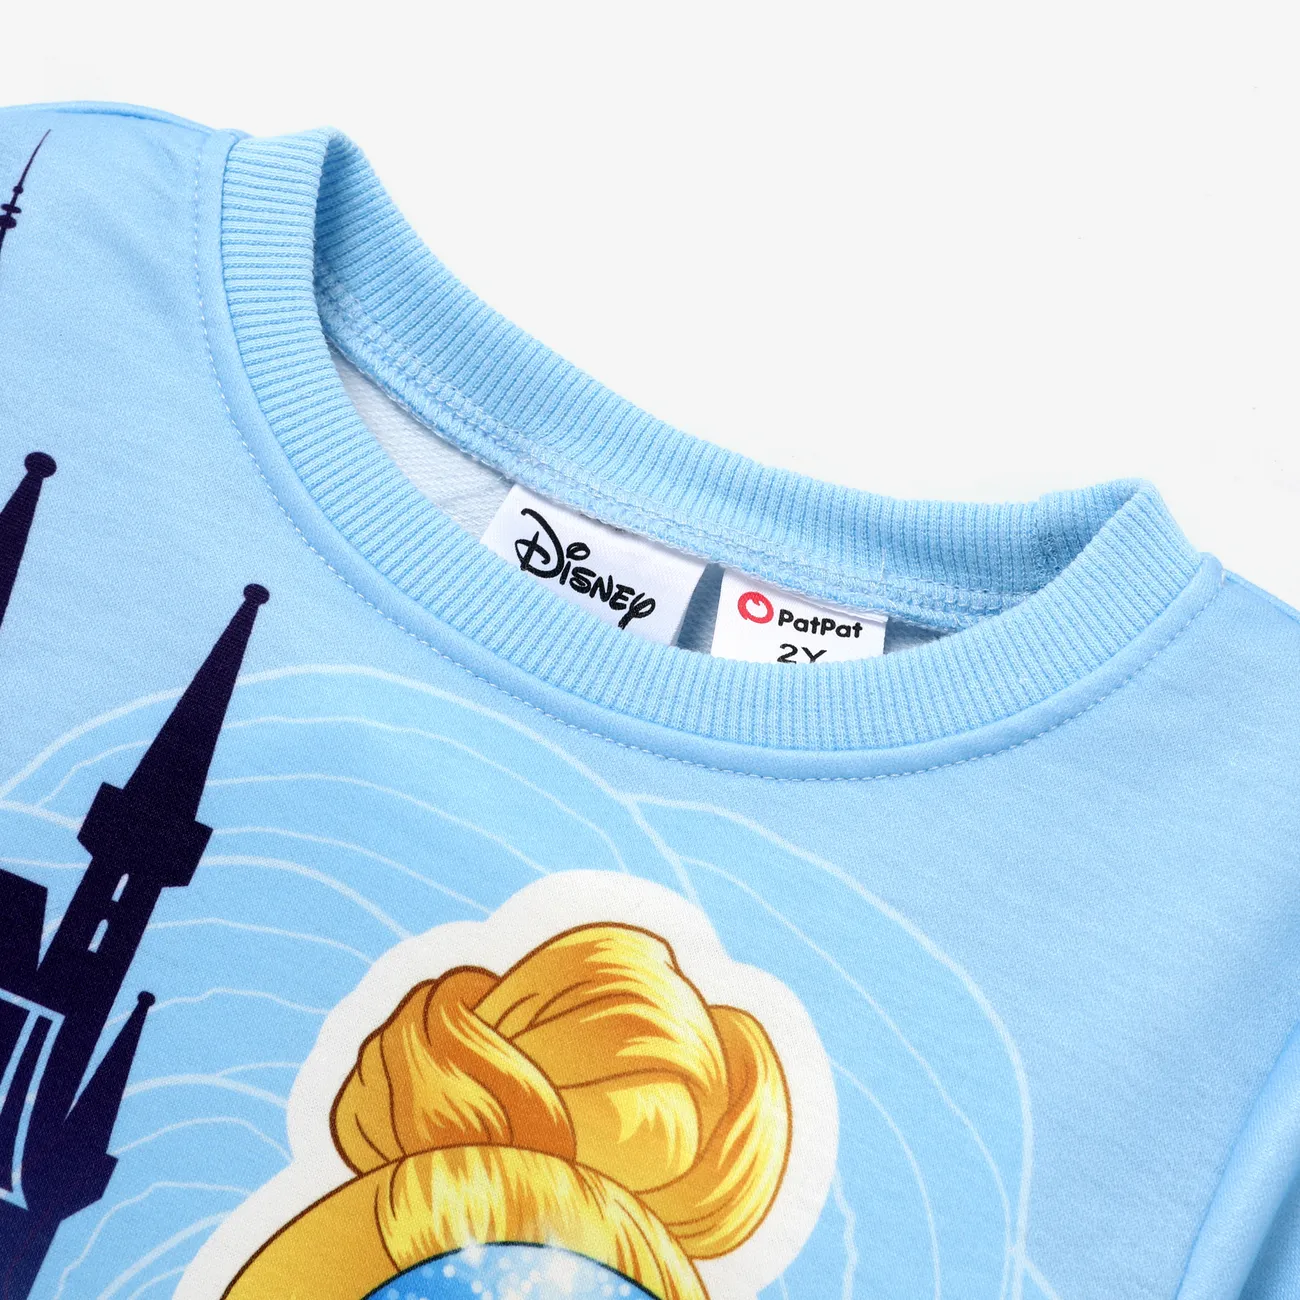 Disney Princess Toddler Girl Character Print Long-sleeve Sweatshirt  Blue big image 1